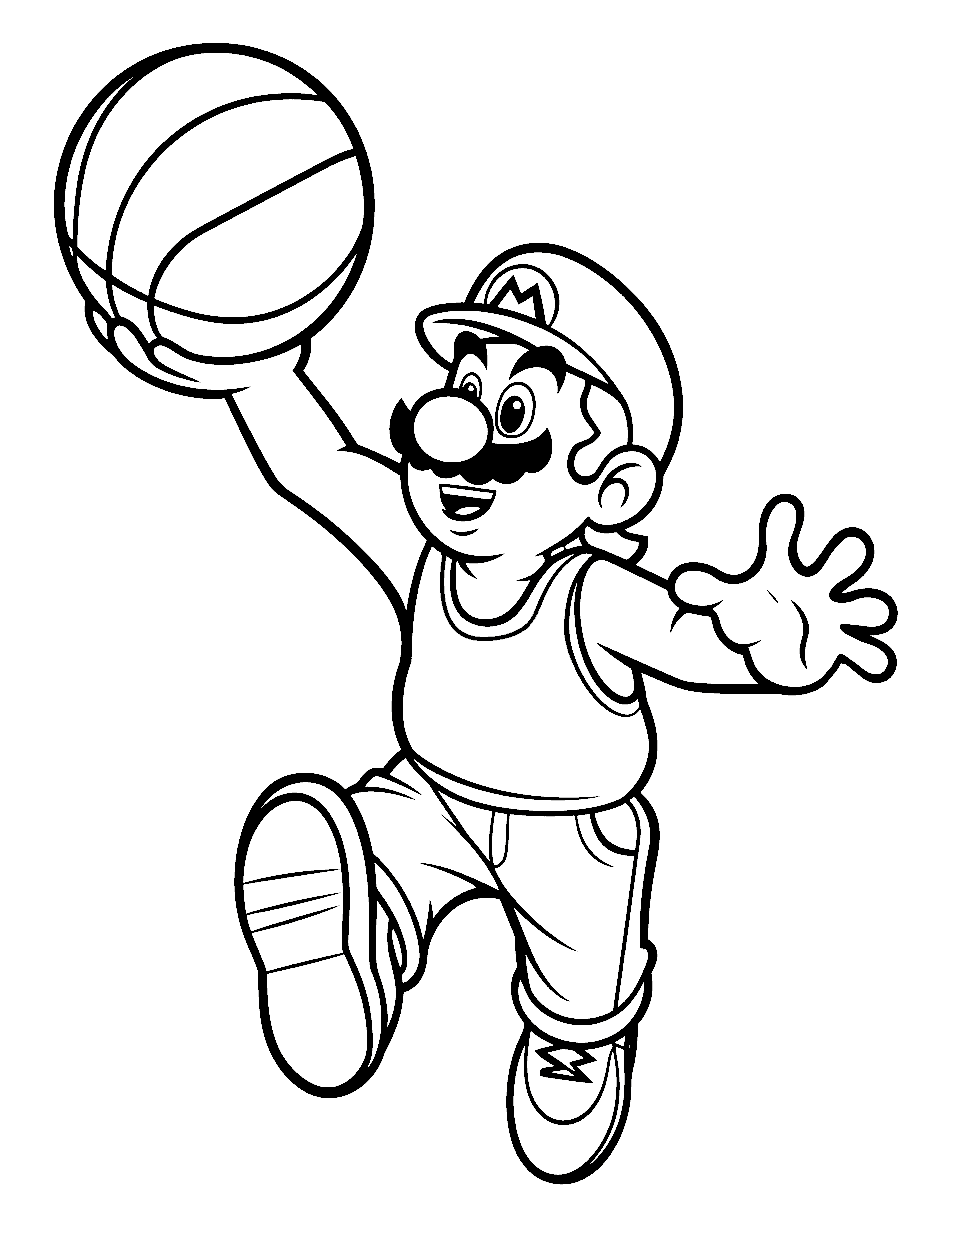 Super Mario Scores Basketball Coloring Page - Super Mario shooting a basket.